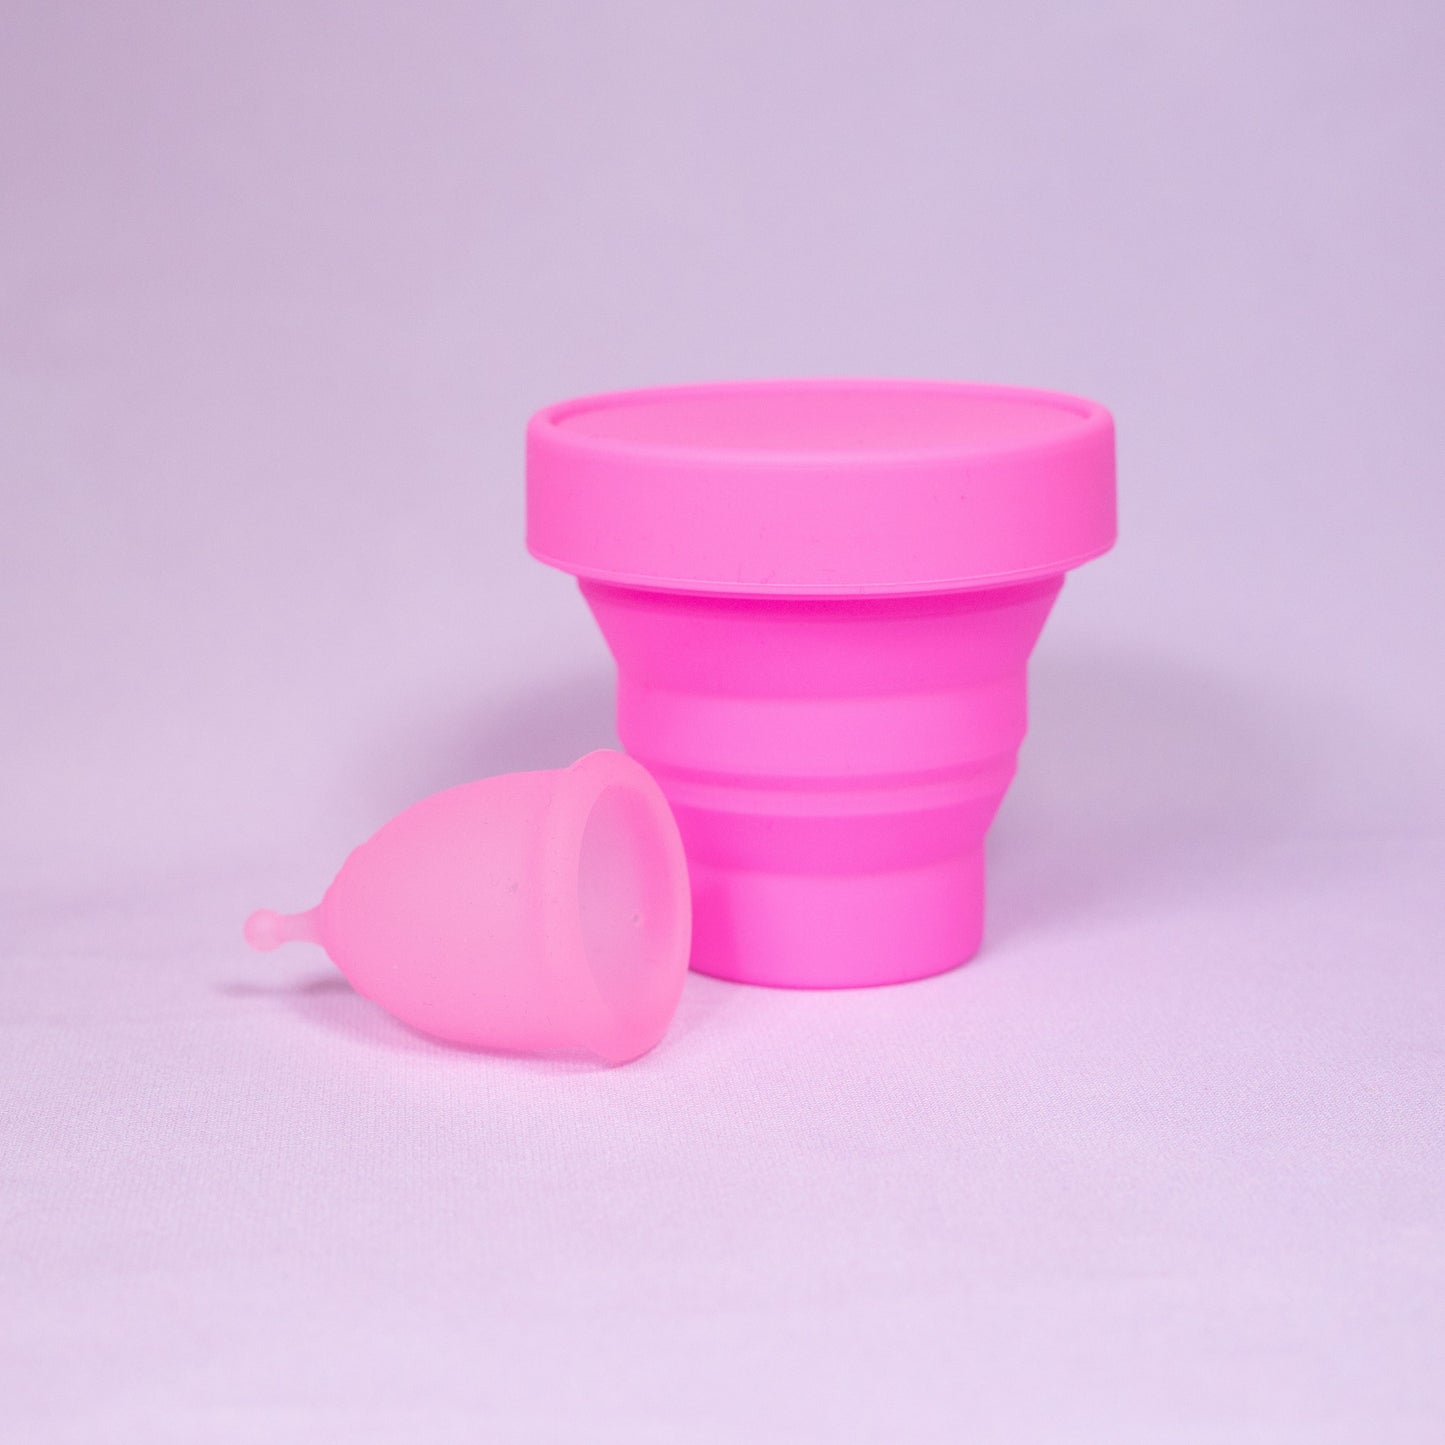 Menstrual cup